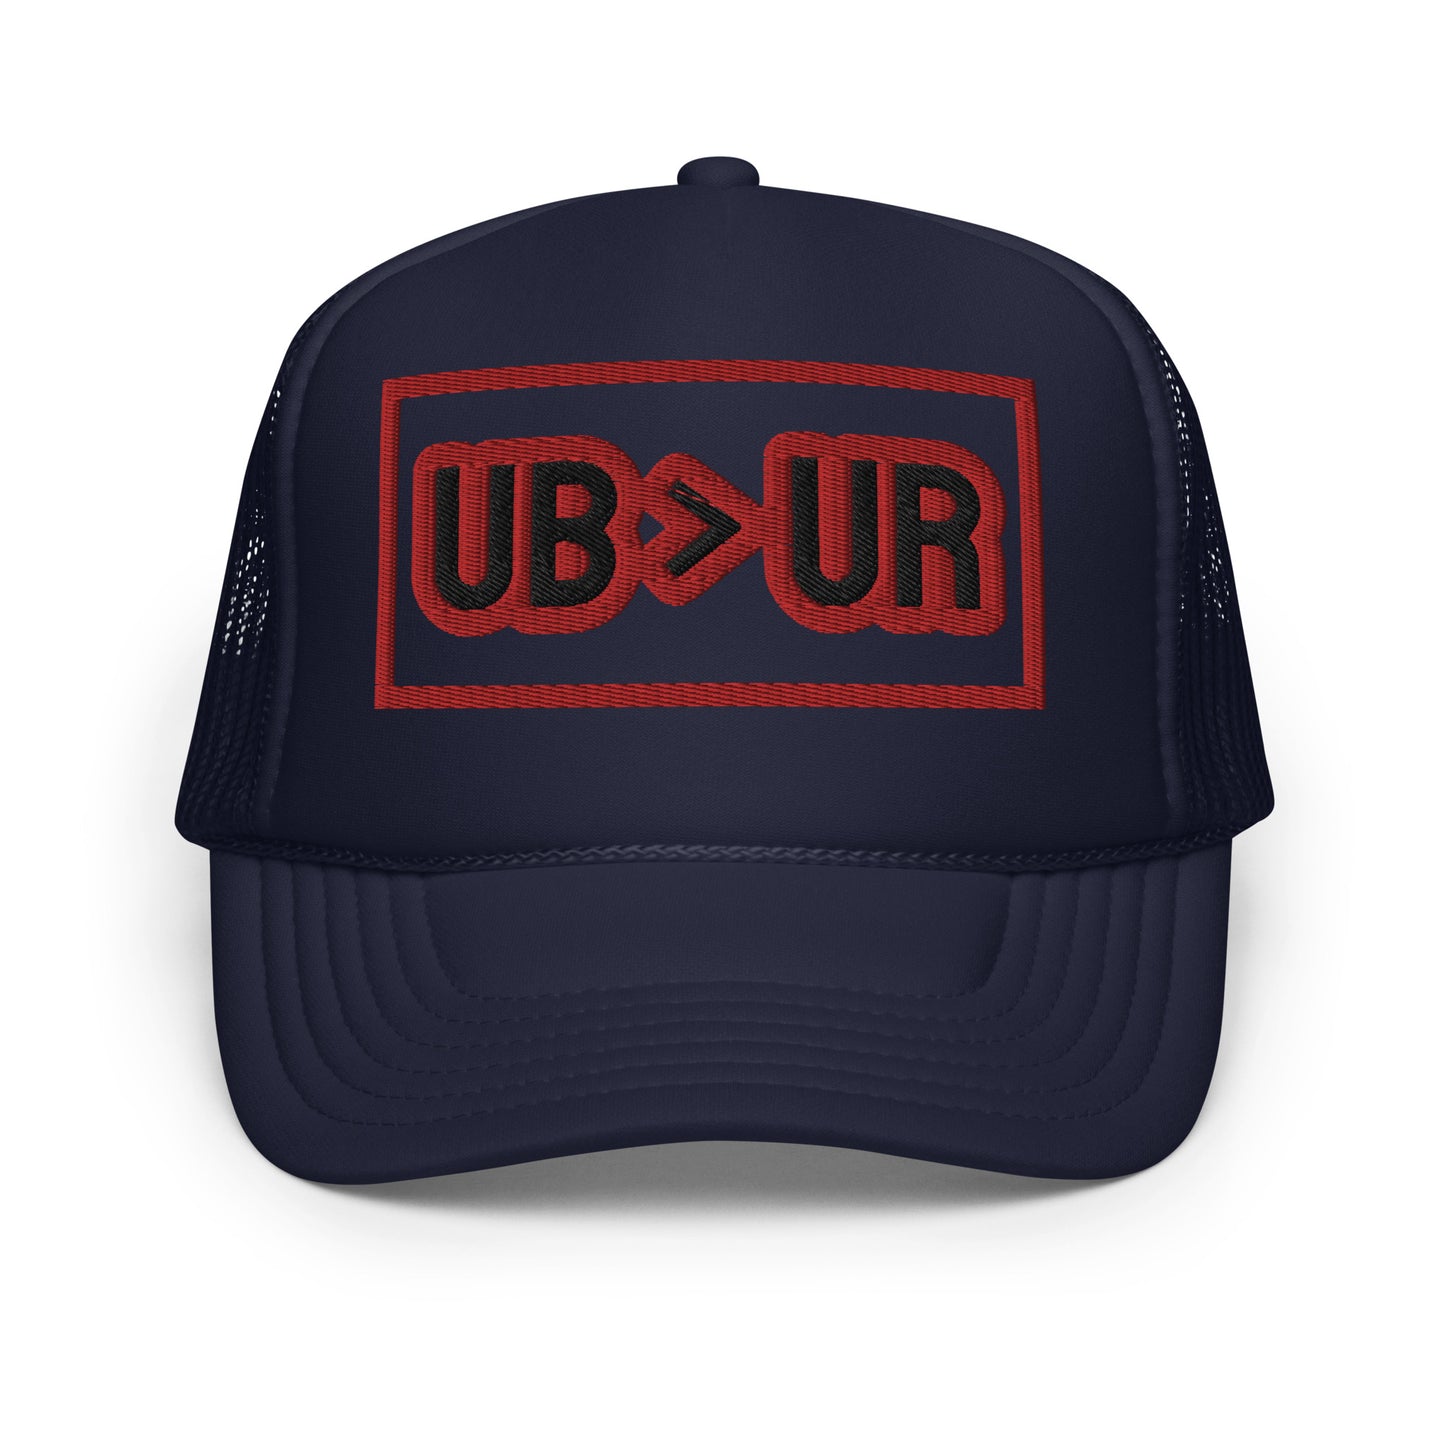 UB>UR-Foam trucker hat with Red/Black Letters